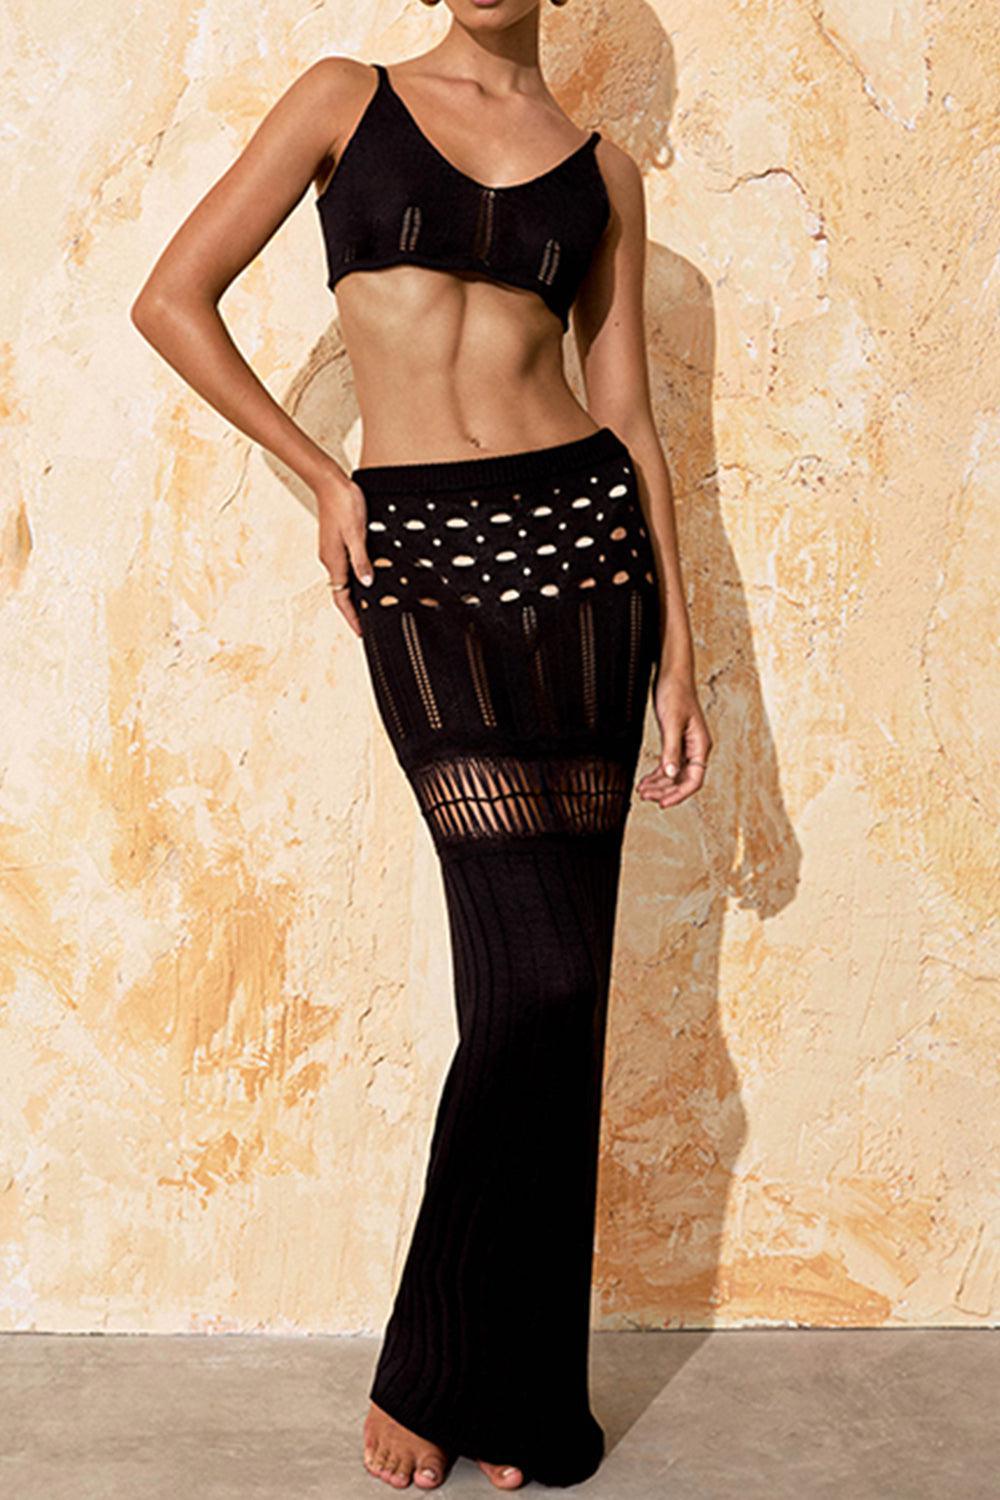 a woman in a black bikini top and skirt